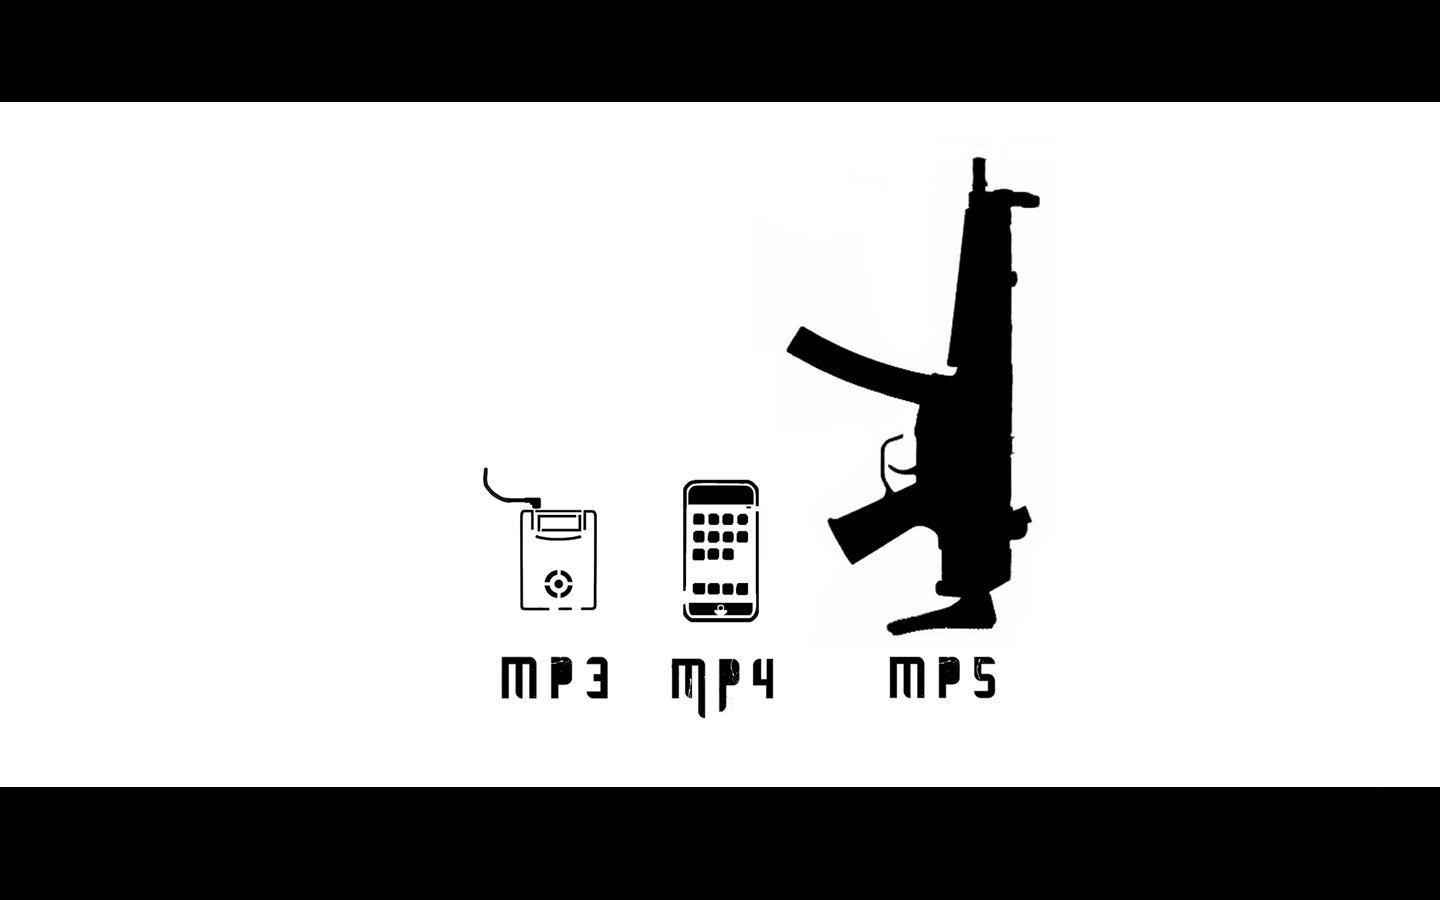 General 1440x900 technology Heckler & Koch minimalism weapon humor Walkman mp5 mp3 iPhone smartphone German firearms submachine gun